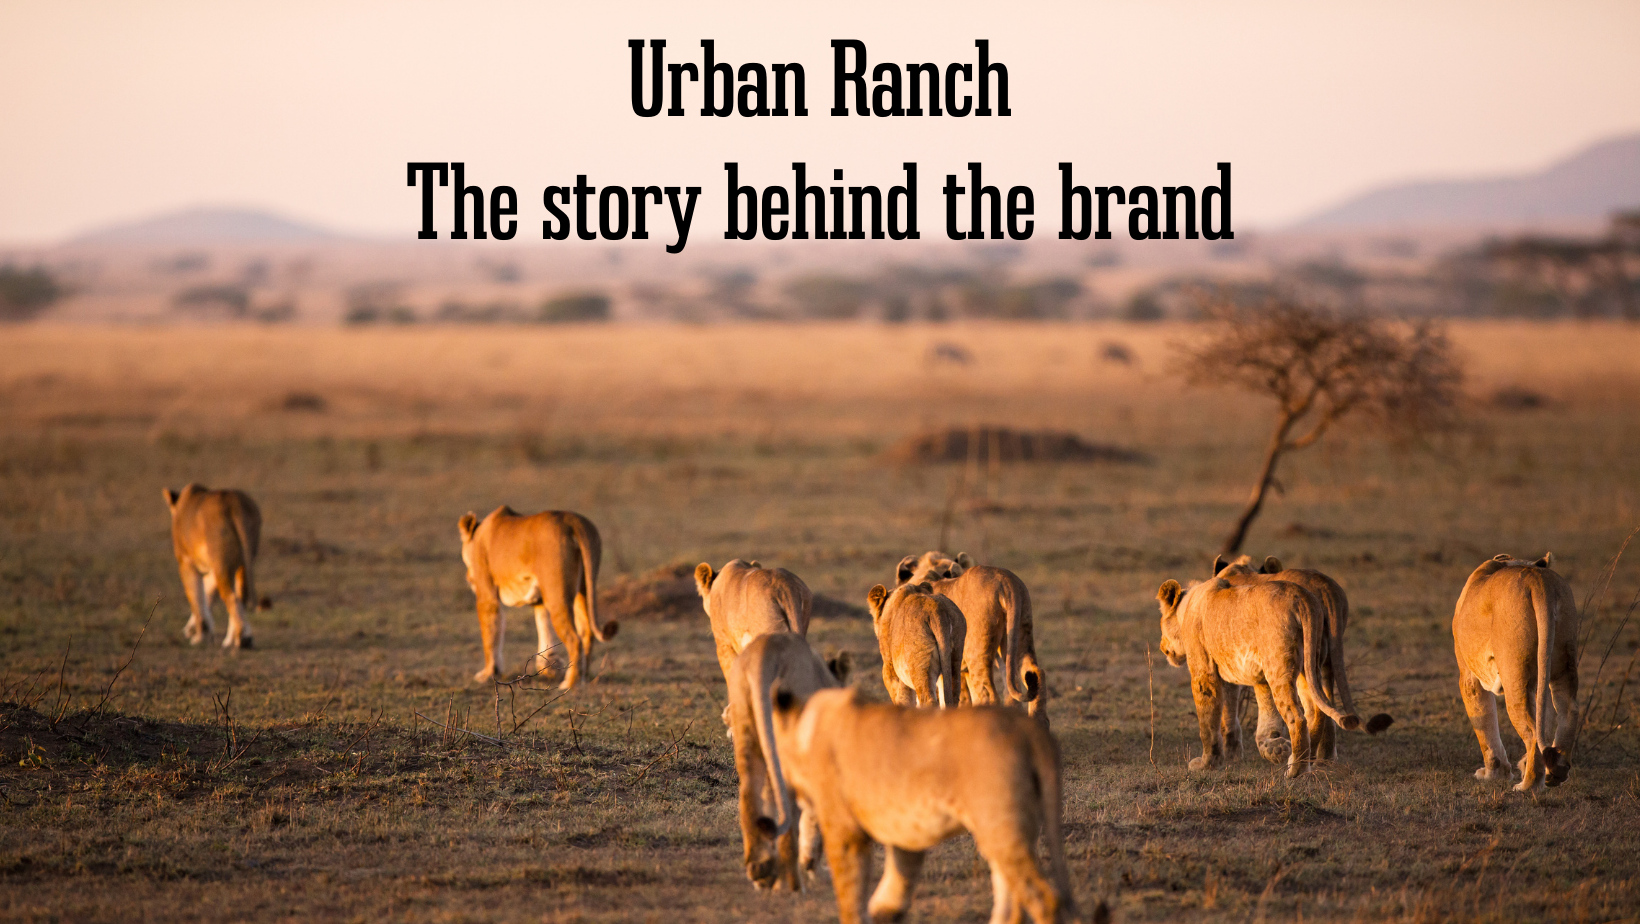 Urban Ranch - Saving wildlife and wild spaces!